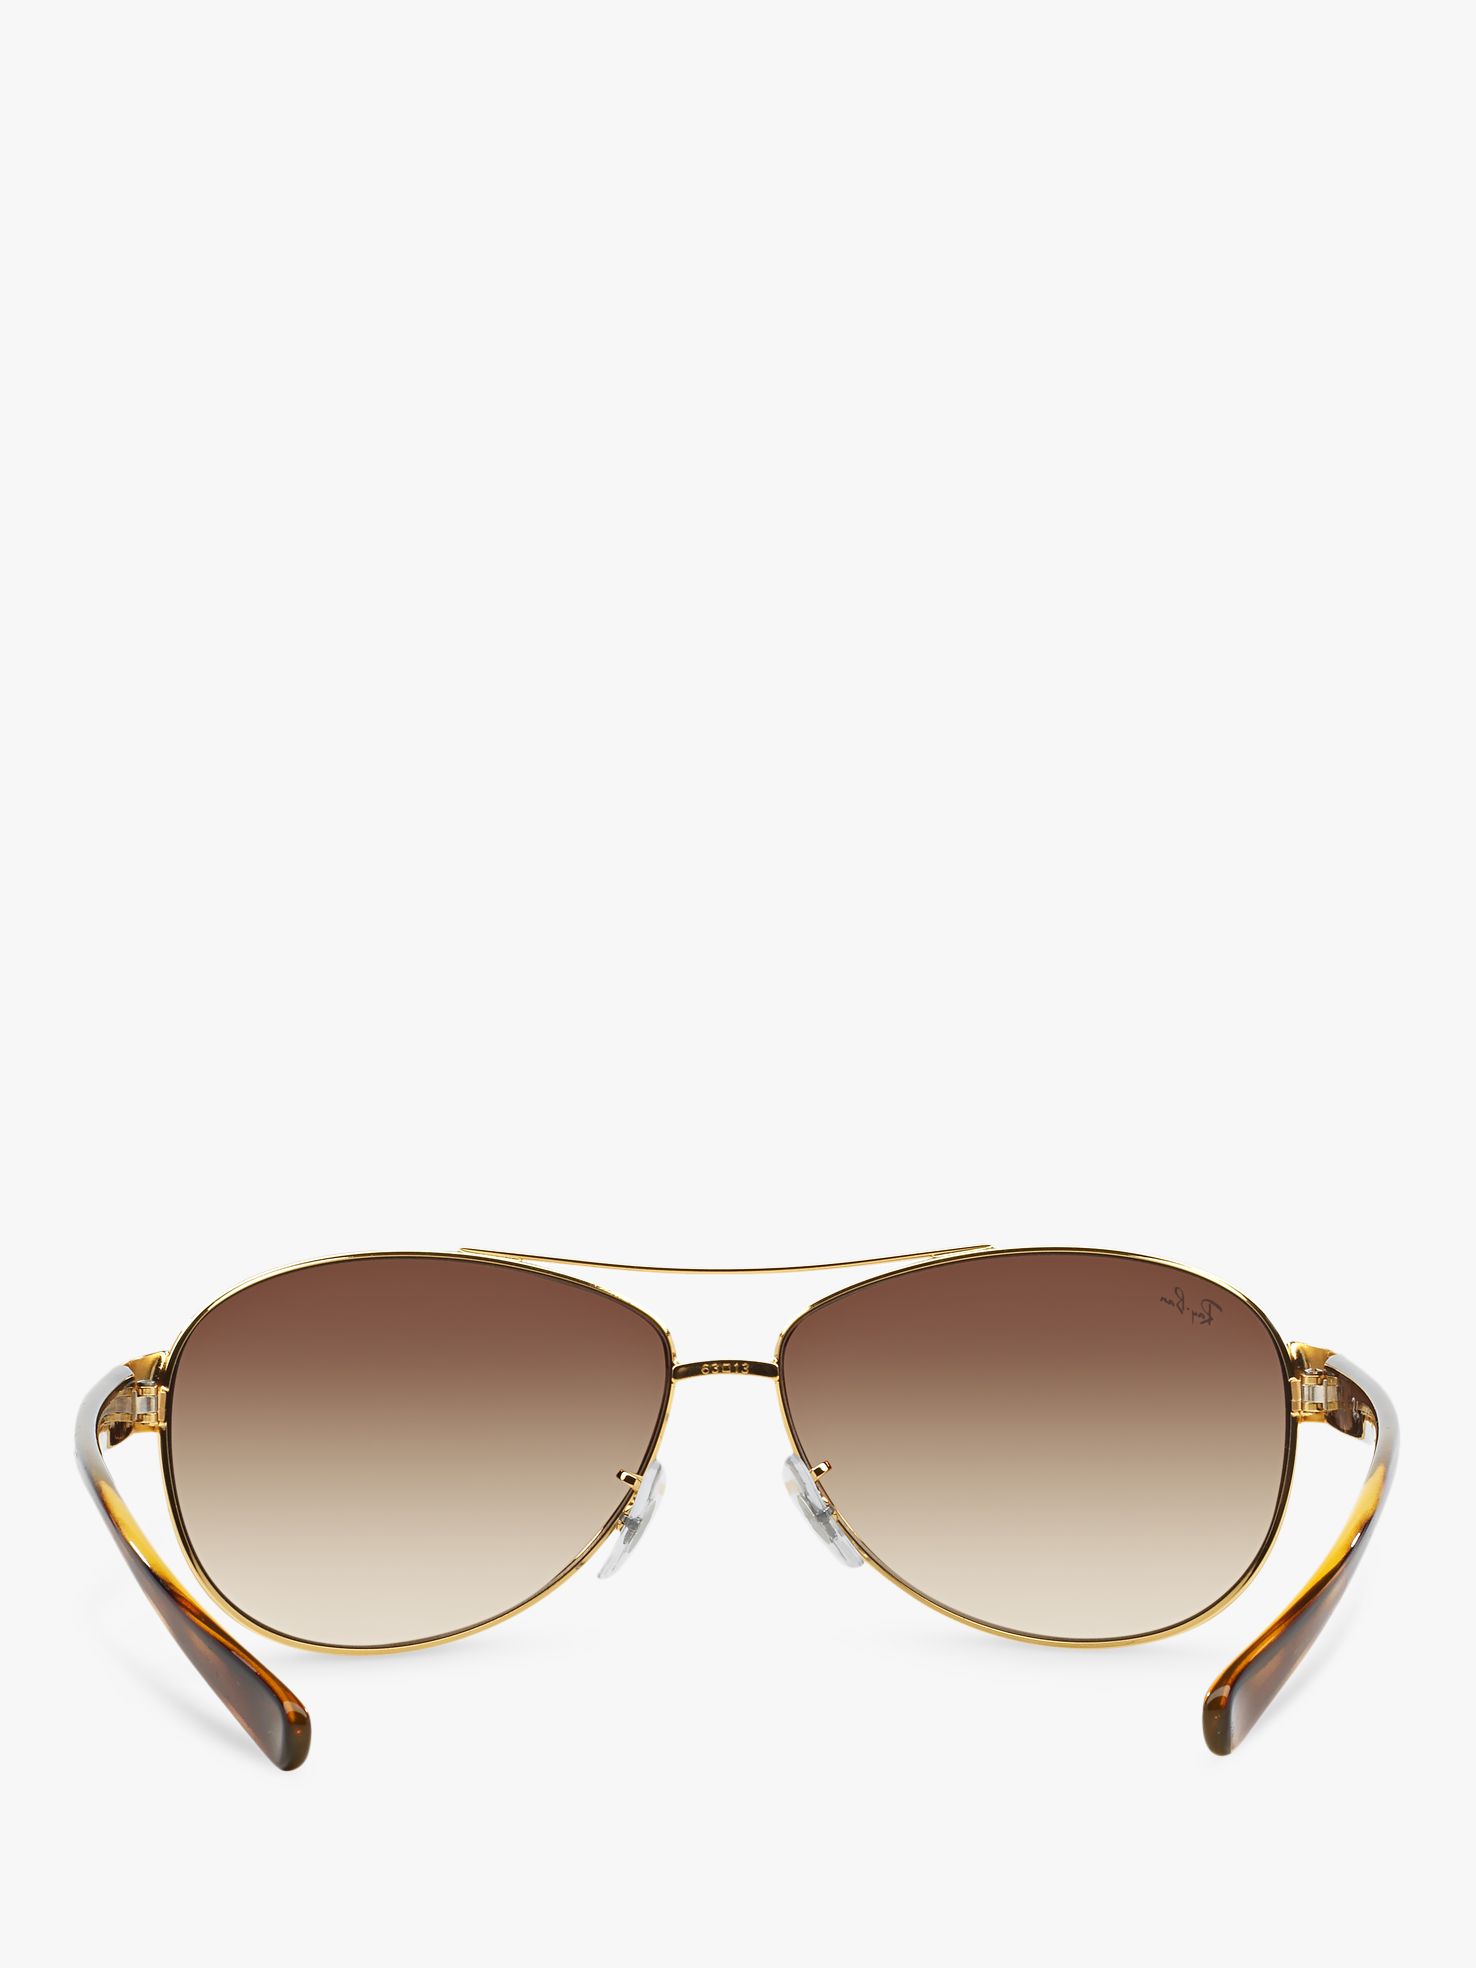 Ray-Ban RB3386 Men's Aviator Sunglasses, Arista Gold/Brown Gradient at ...